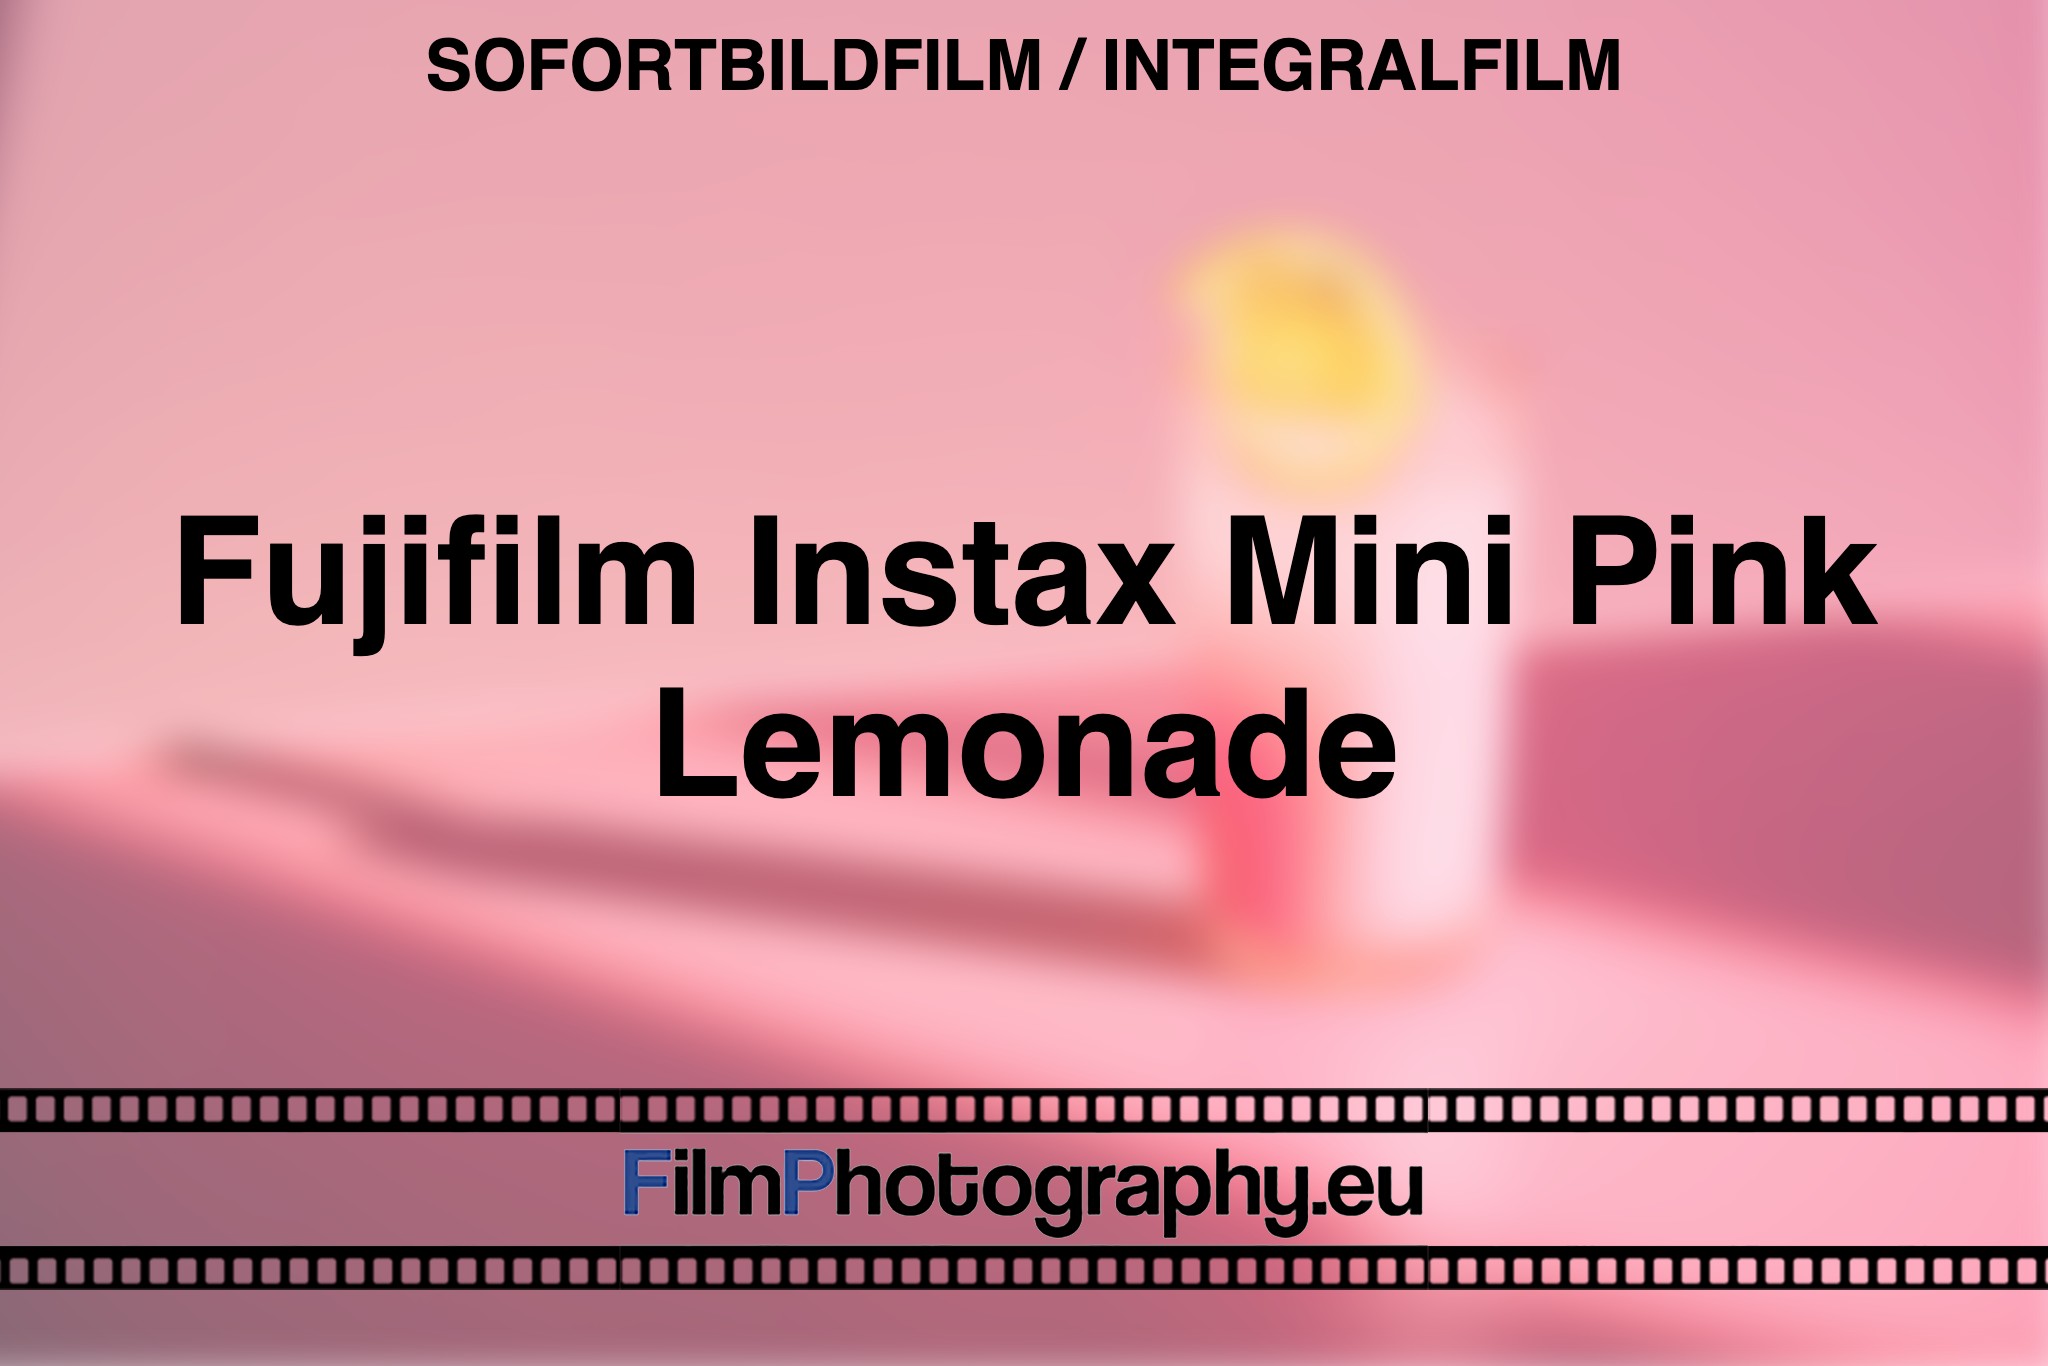 fujifilm-instax-mini-pink-lemonade-sofortbildfilm-integralfilm-fp-bnv